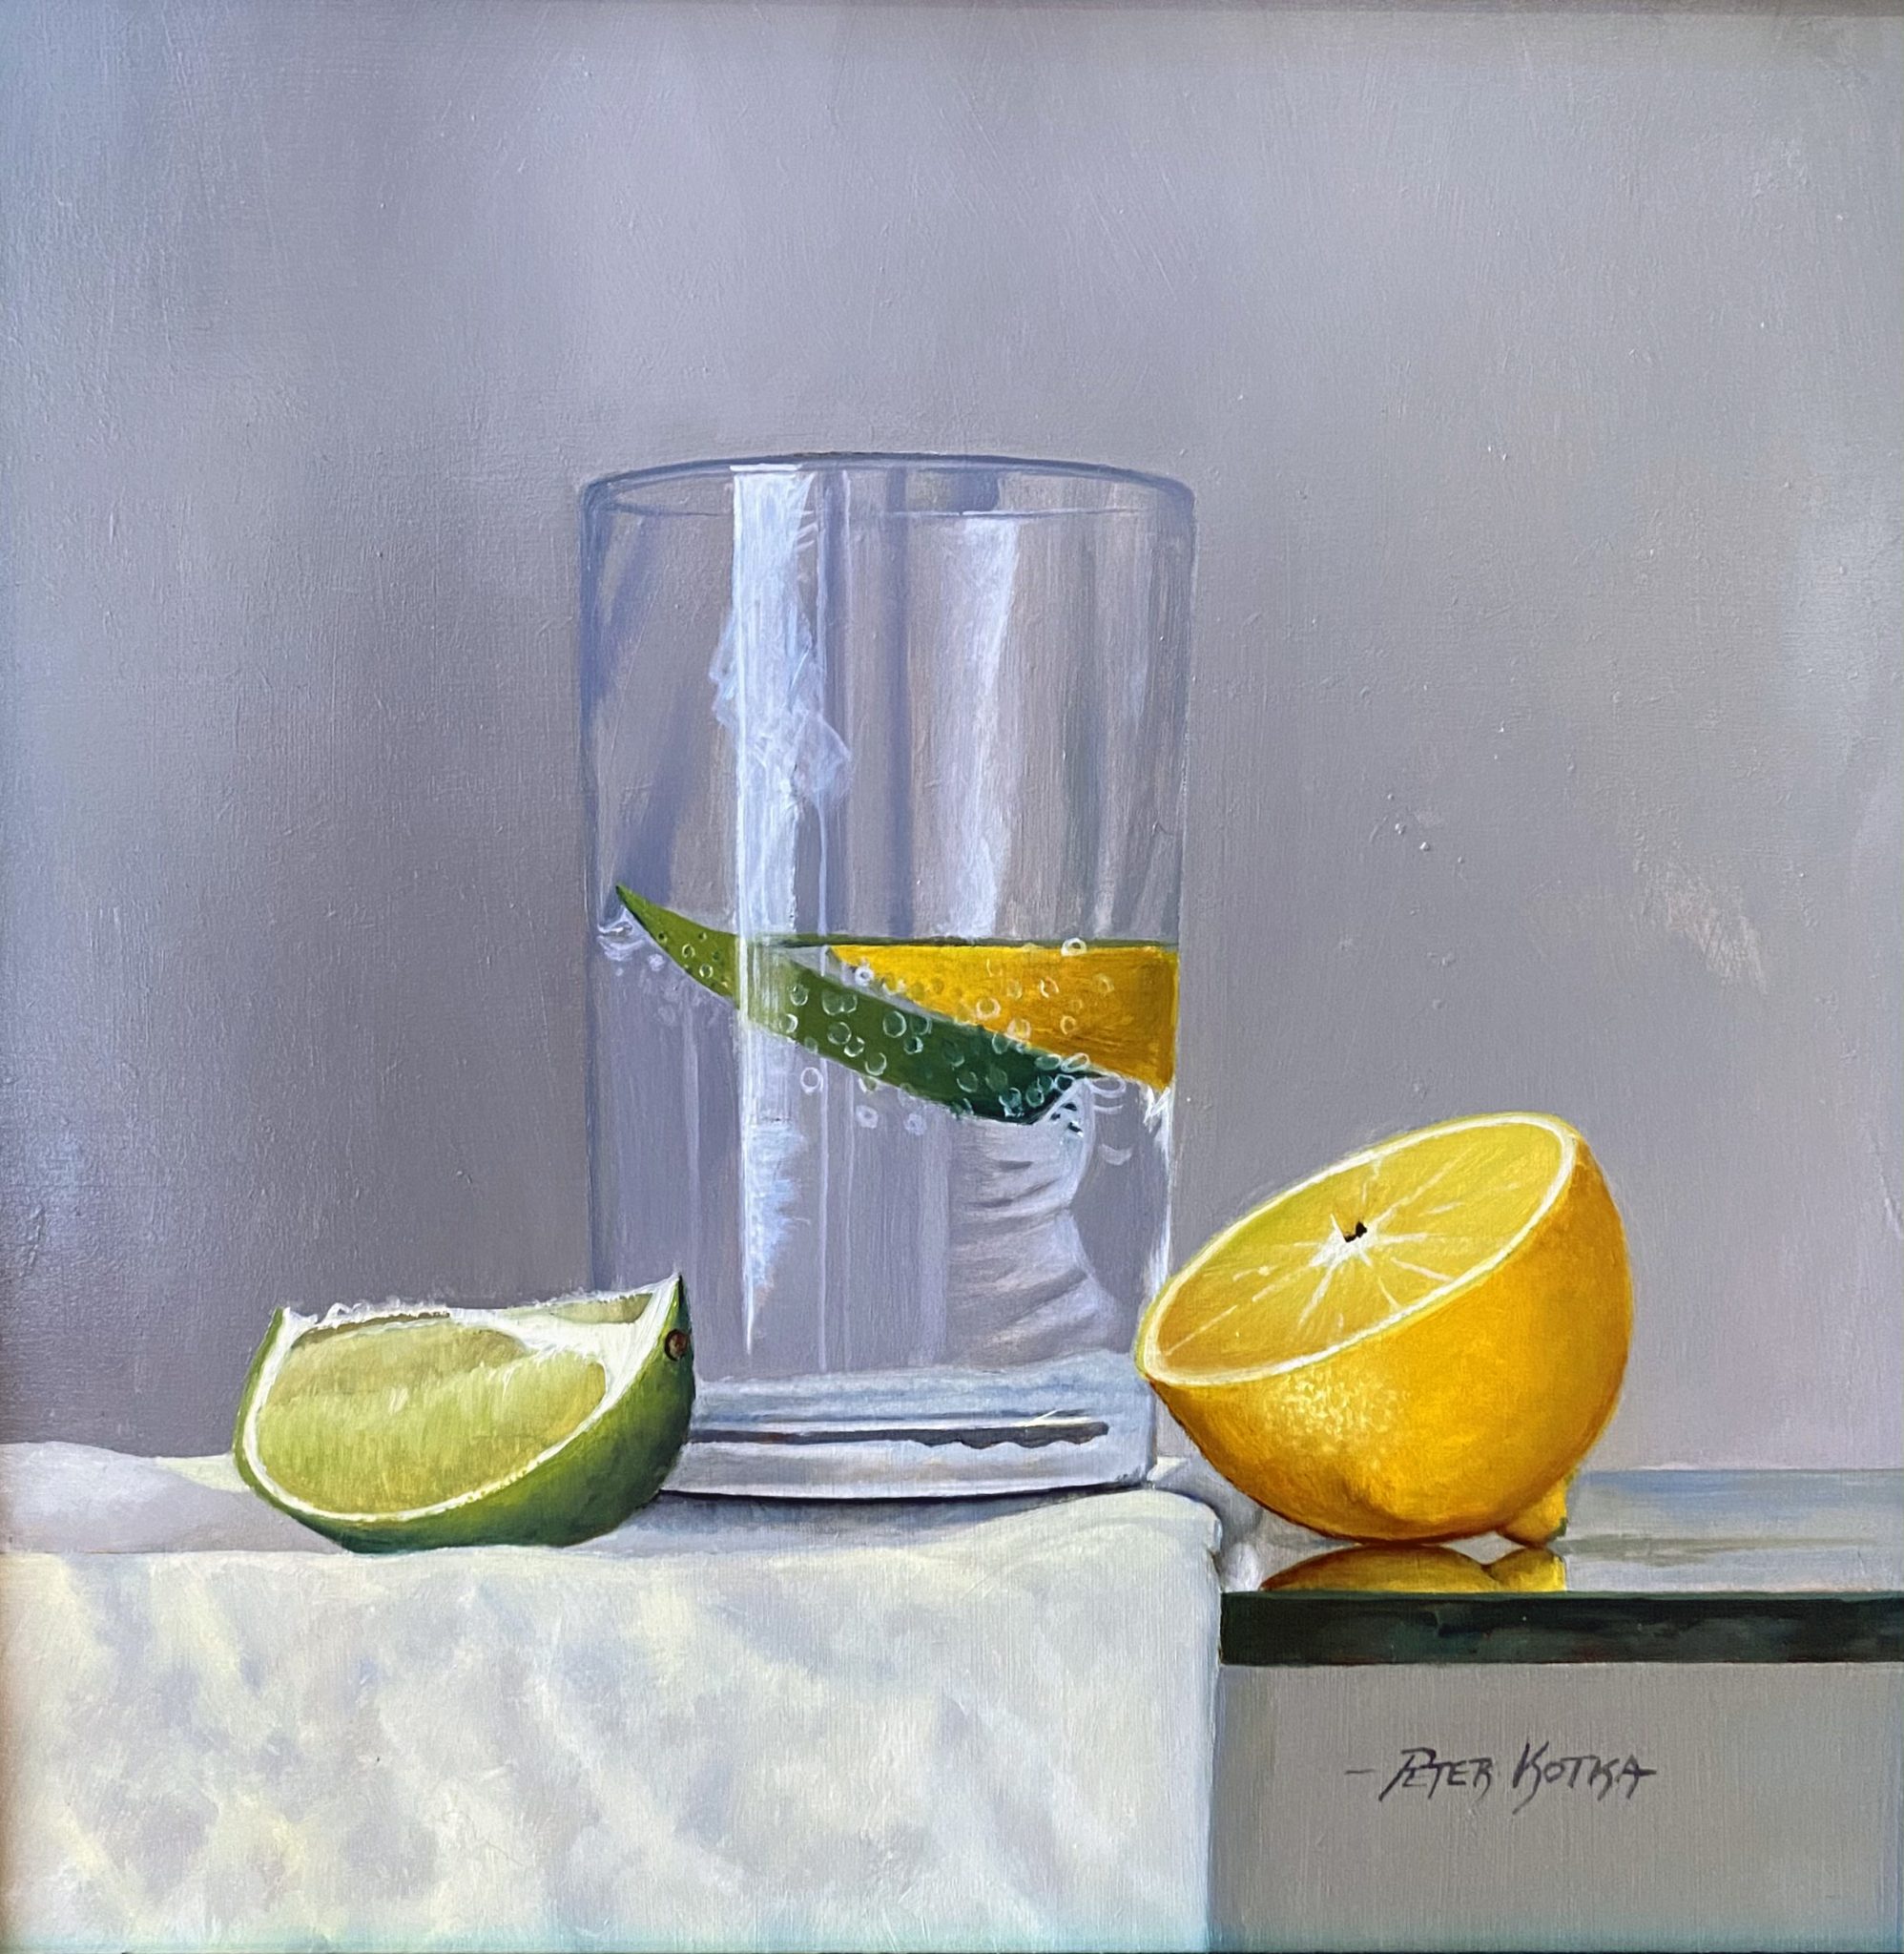 Lemon and Lime by Peter Kotka